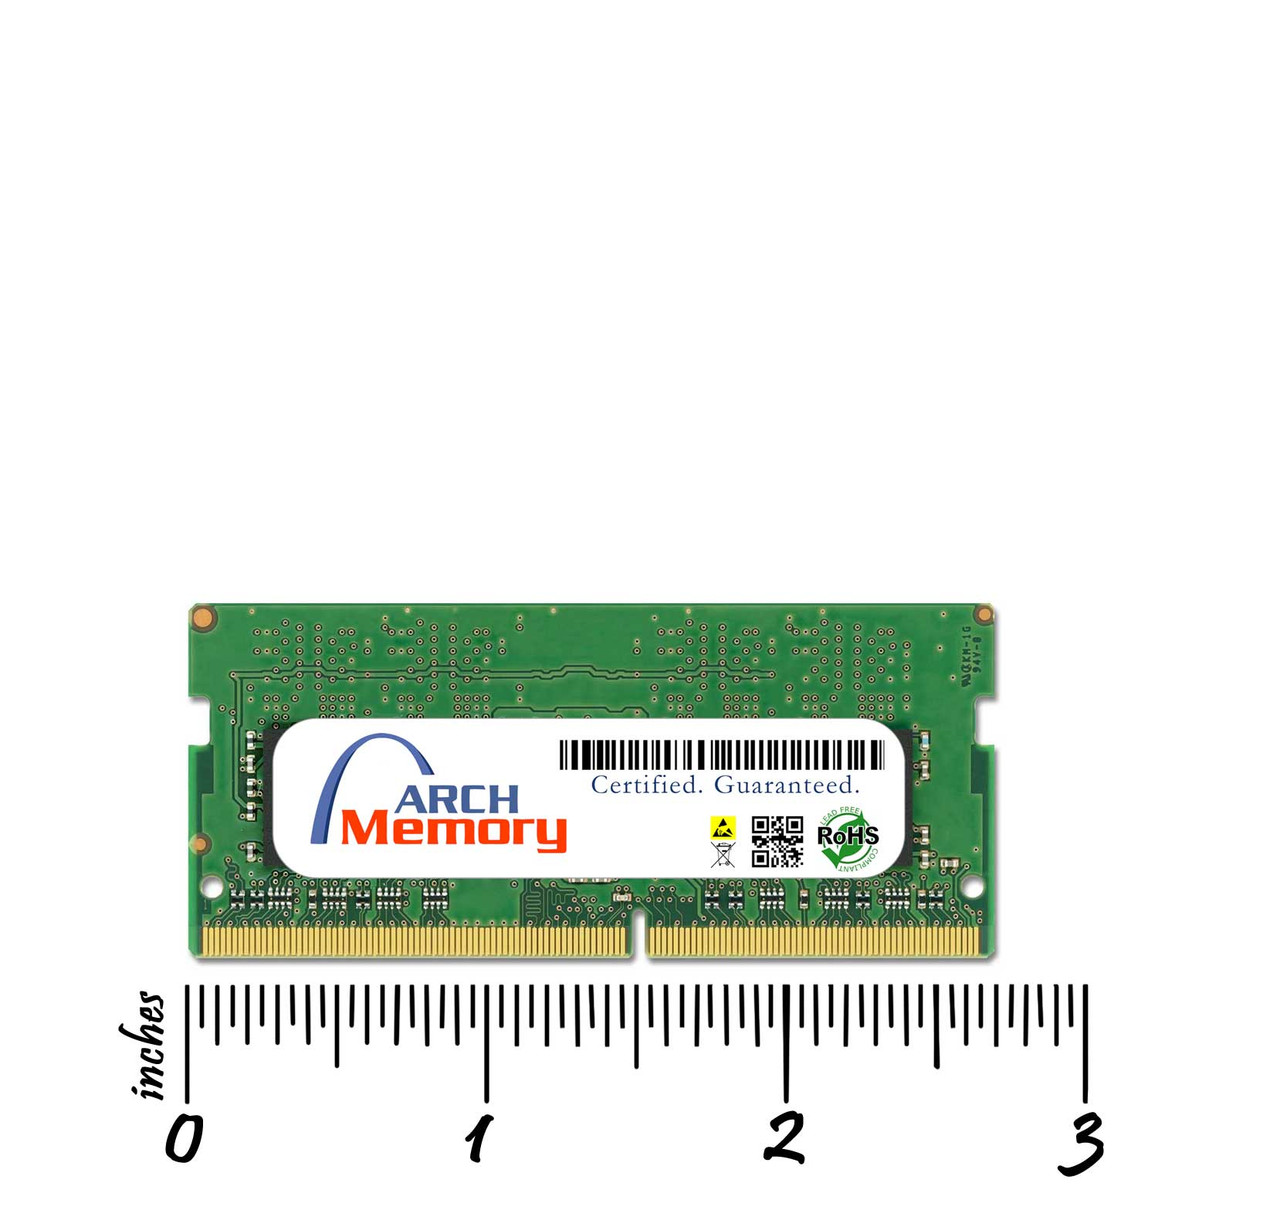 13L77AT 8 GB 260-Pin DDR4-3200 PC4-25600 So-dimm RAM Memory for HP EliteOne 800 G6 Upgrade* HP8GB3200SOr1b8-MG06